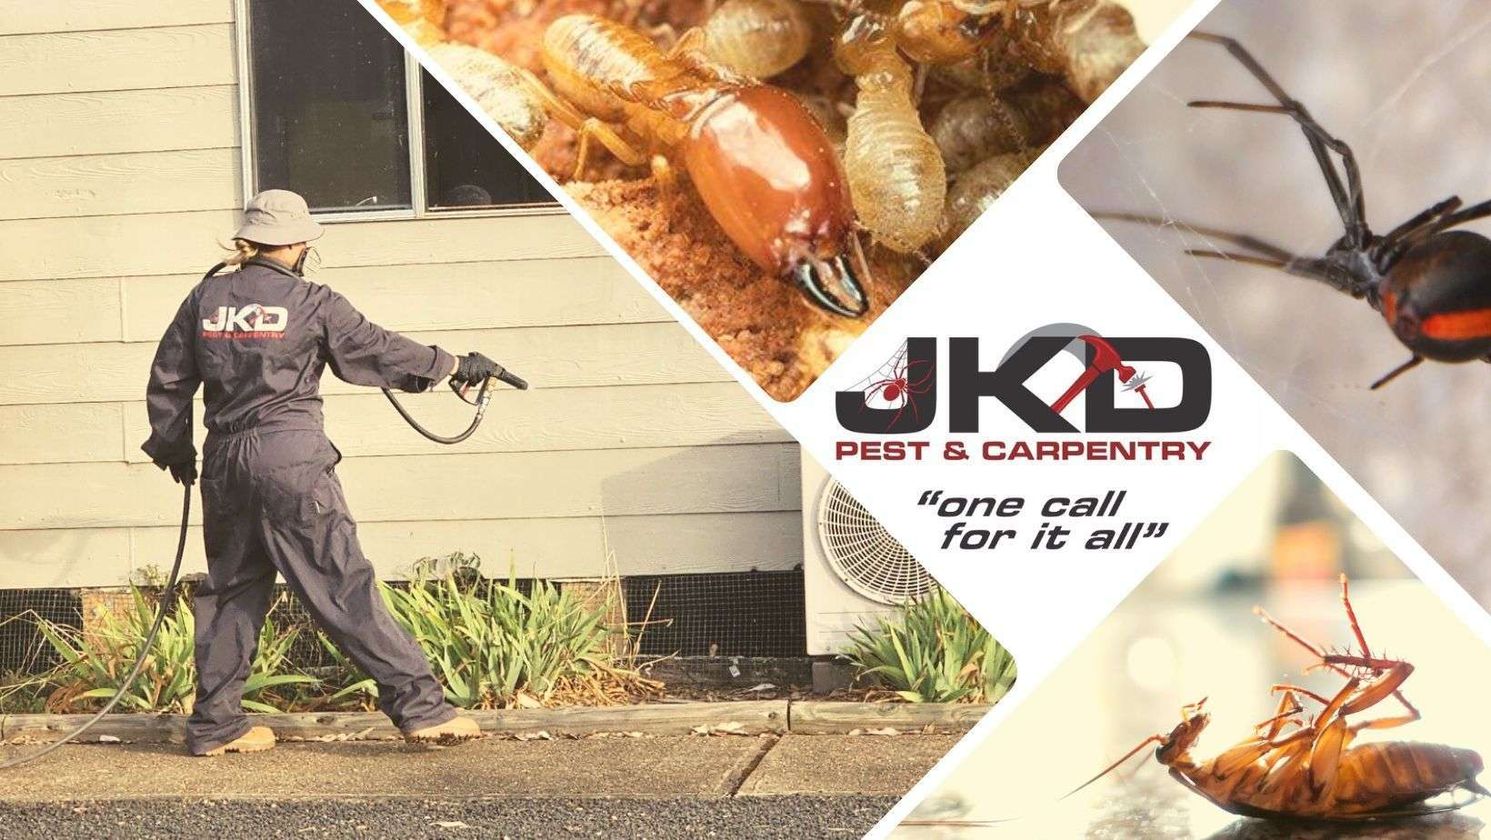 JKD Pest & Carpentry featured image